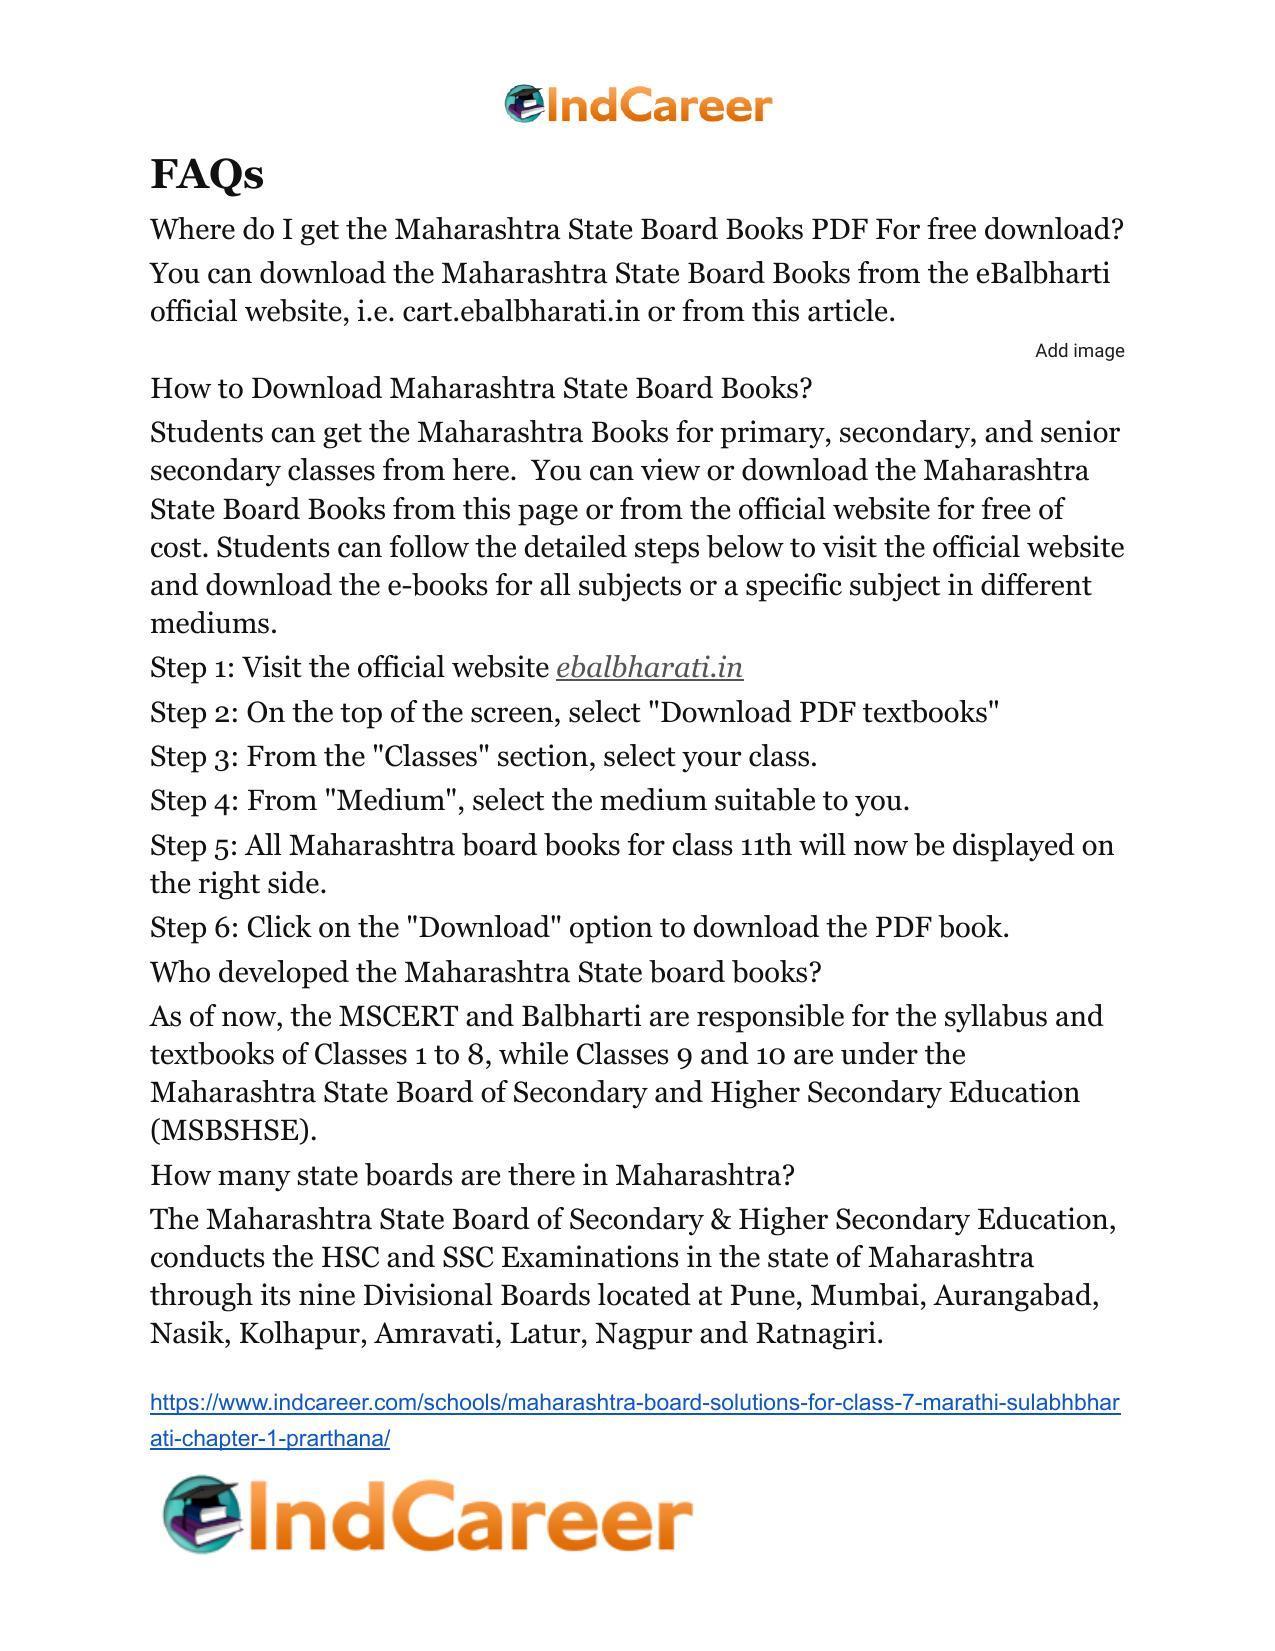 Maharashtra Board Solutions for Class 7- Marathi Sulabhbharati: Chapter 1- प्रार्थना - Page 11